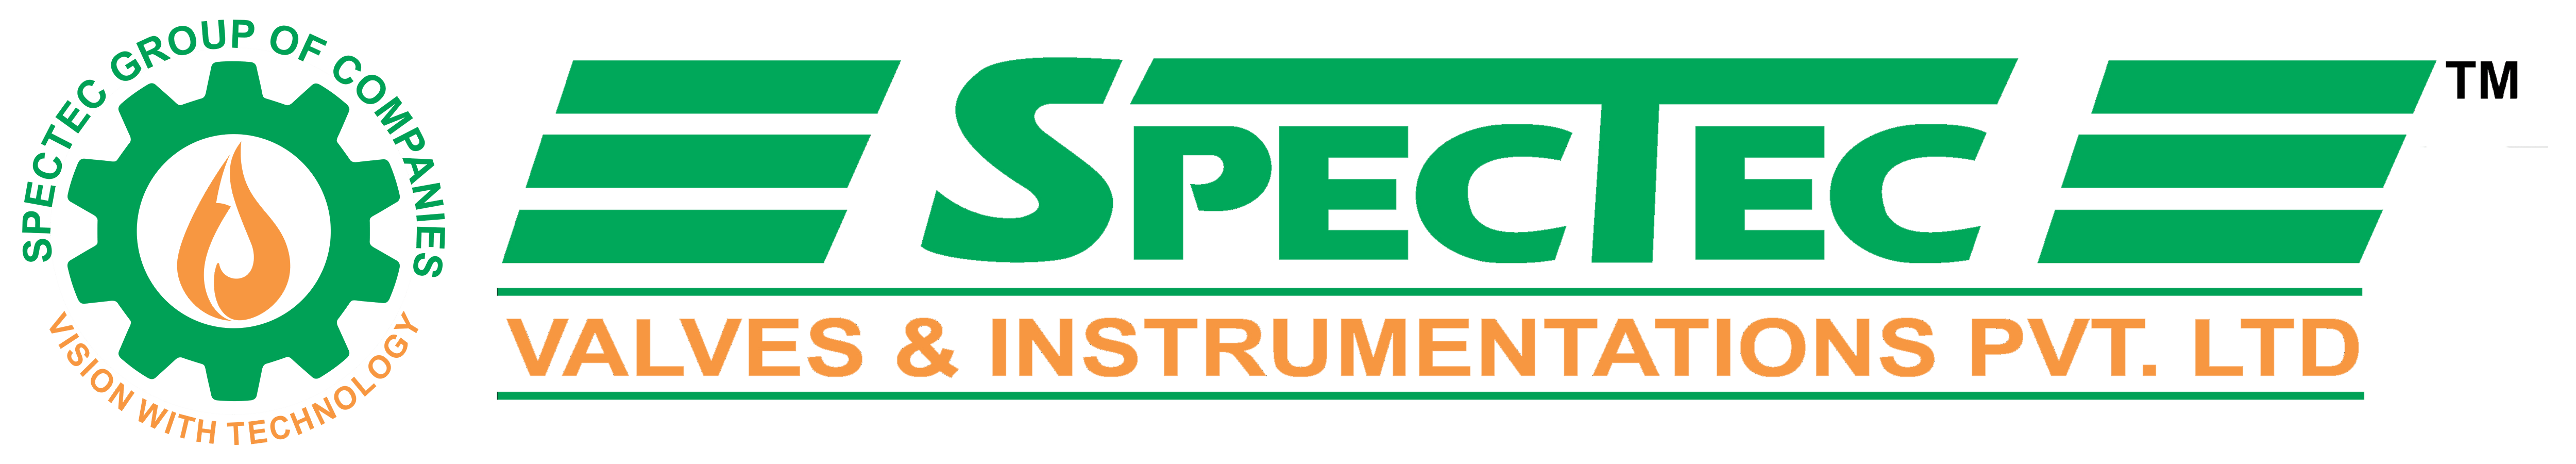 Logo of Spectec Valves